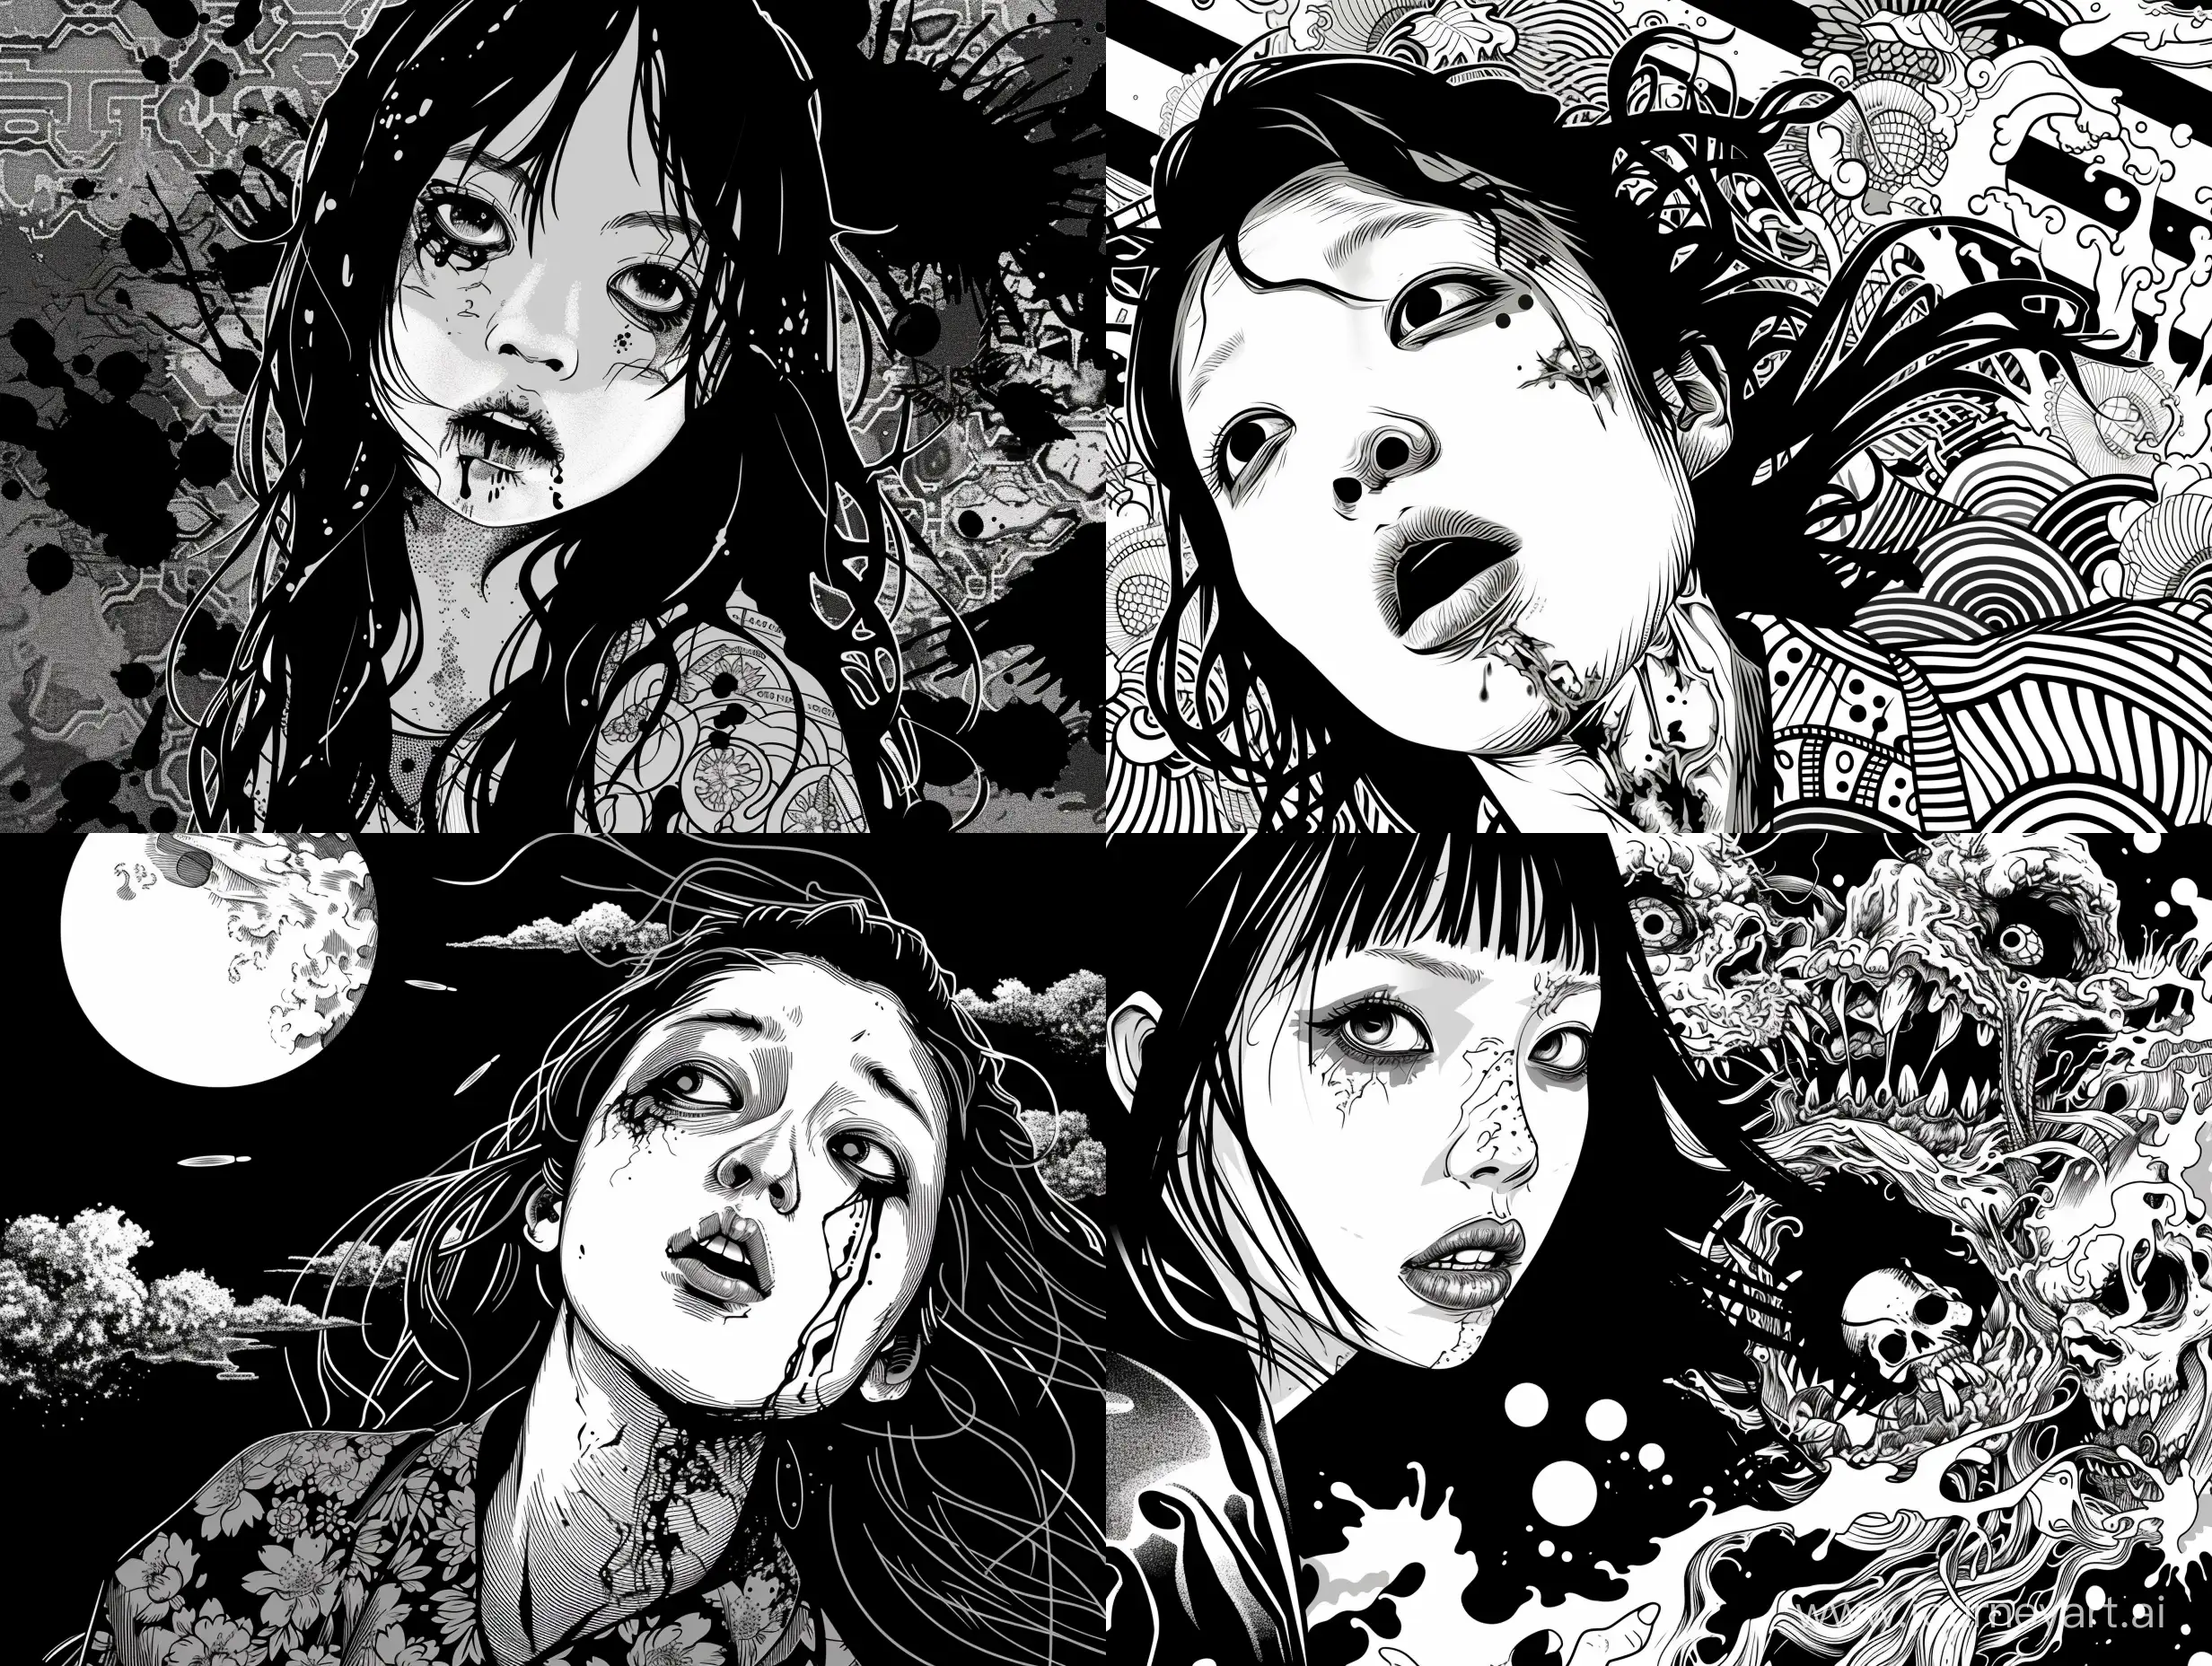 black and white japanese horror art of a woman ,
zombie, psychological horror, dark art, vector style illustration 